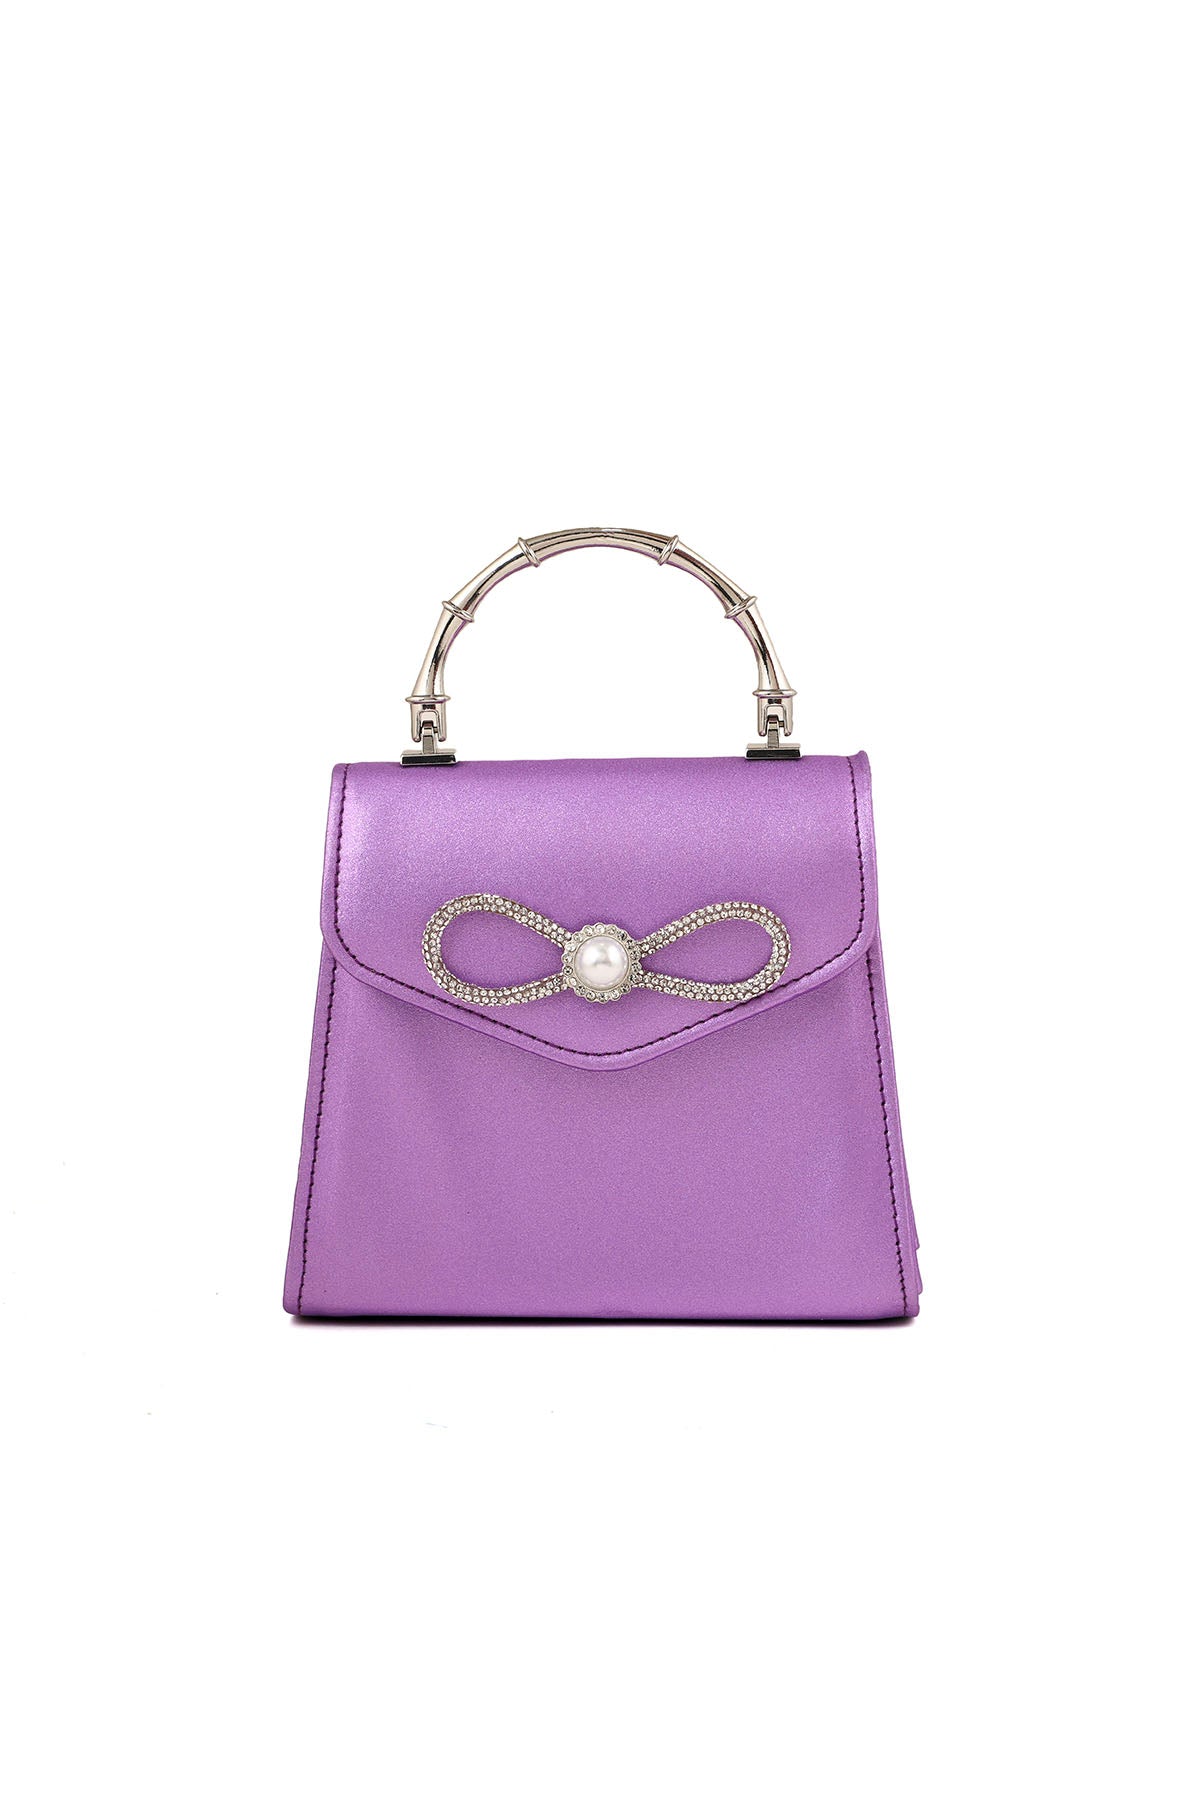 Top Handle Hand Bags B21592-Purple